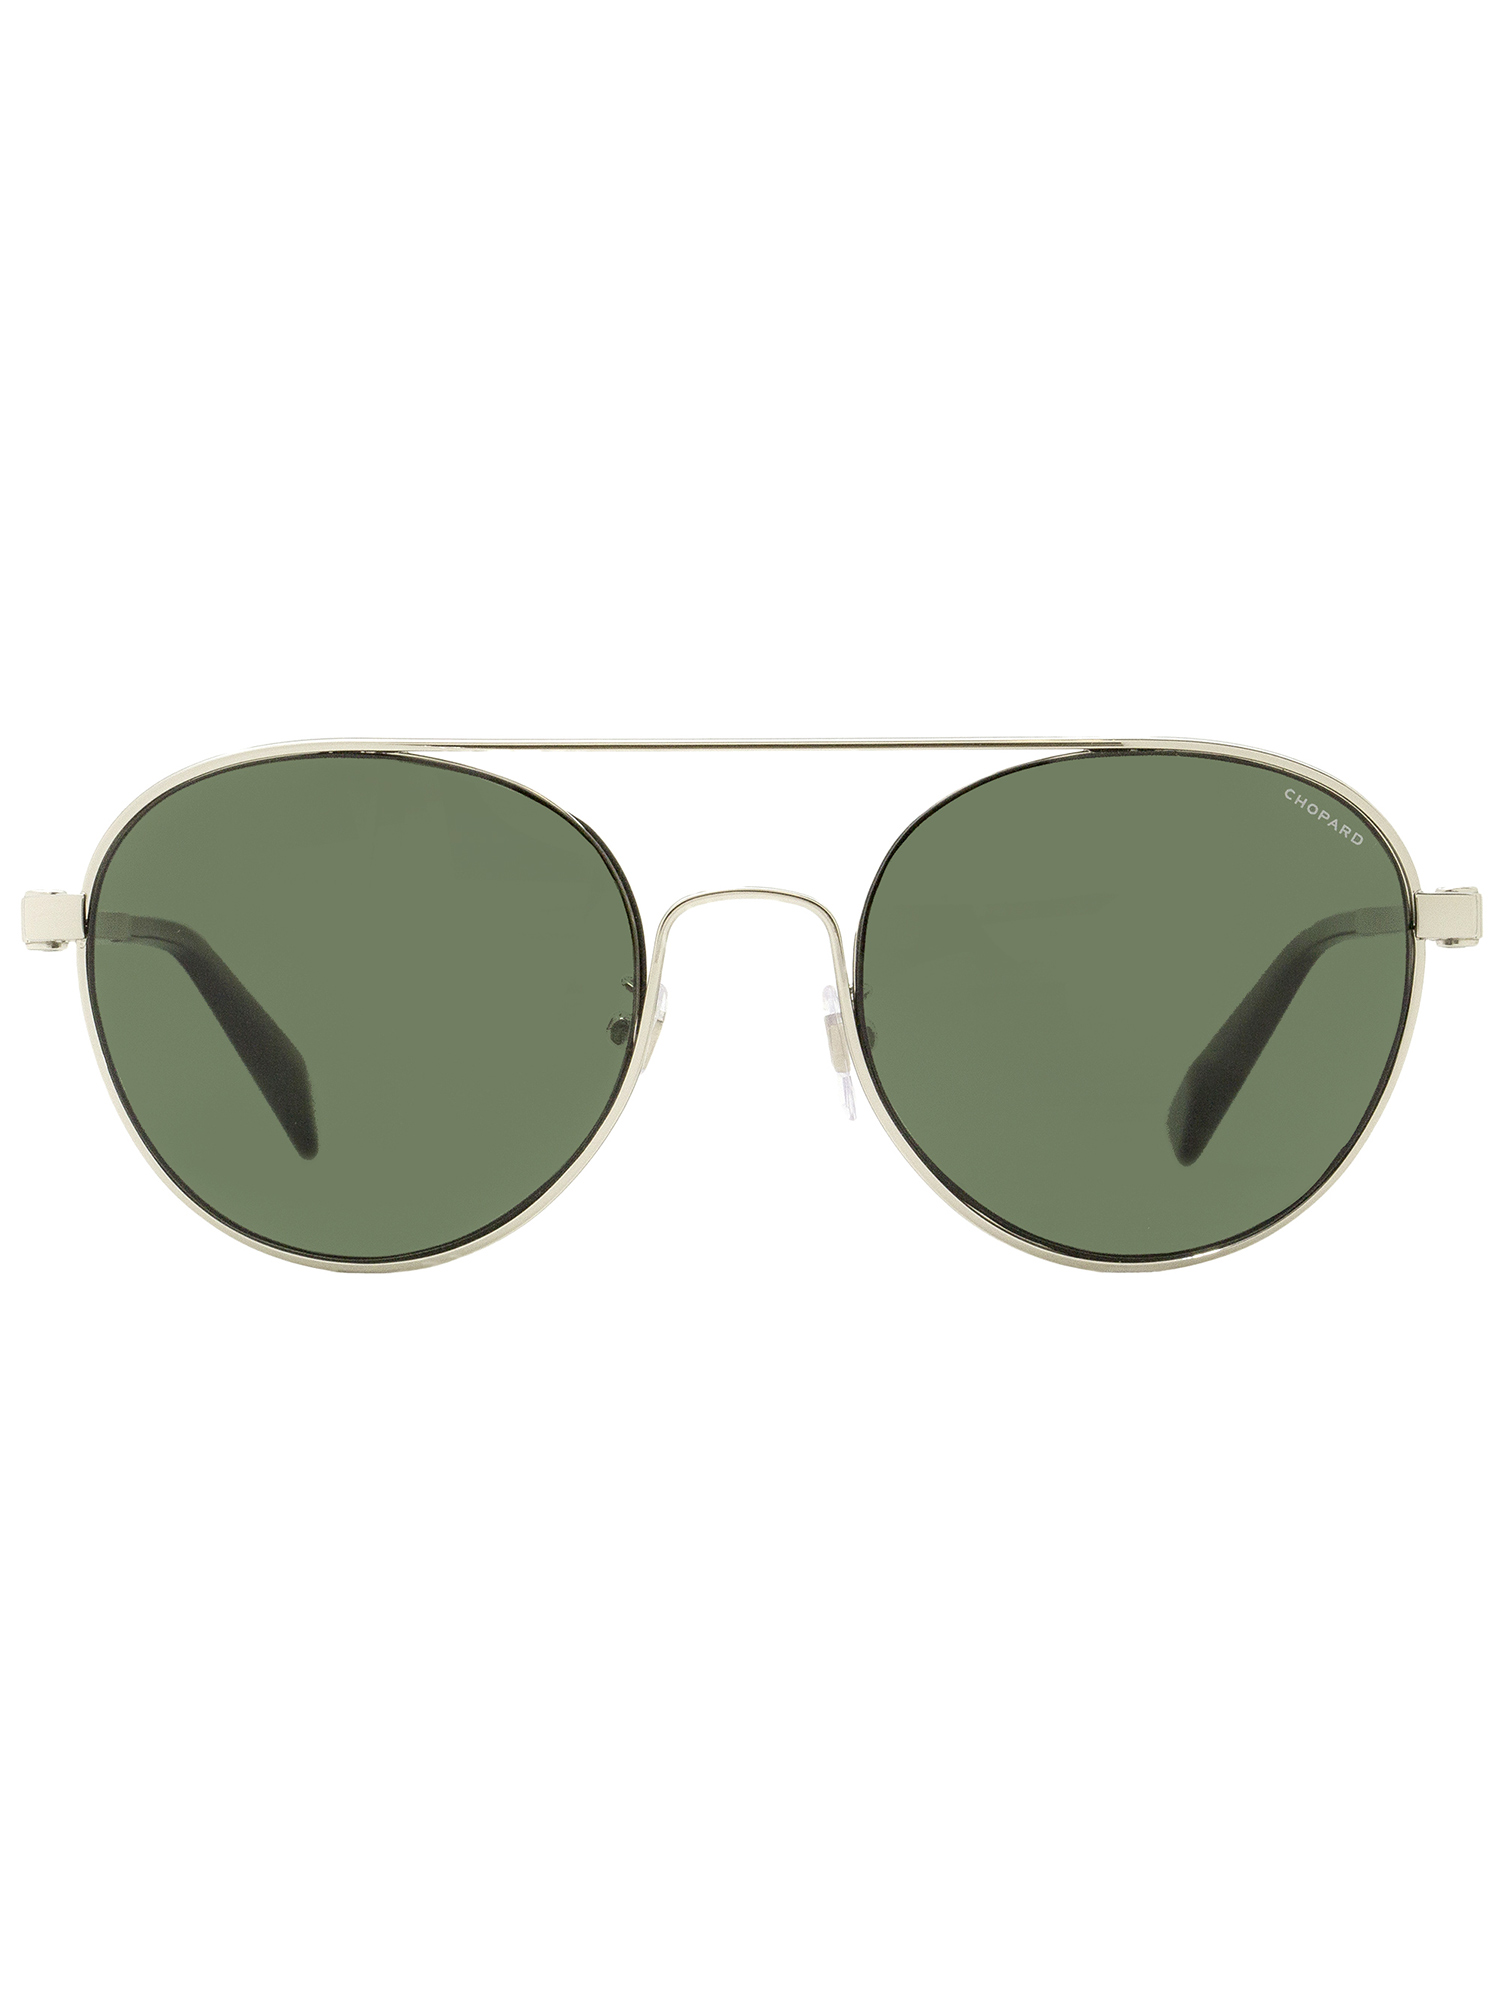 Chopard Green Polarized Round Men's Sunglasses SCHC29 579P 55 - image 2 of 2